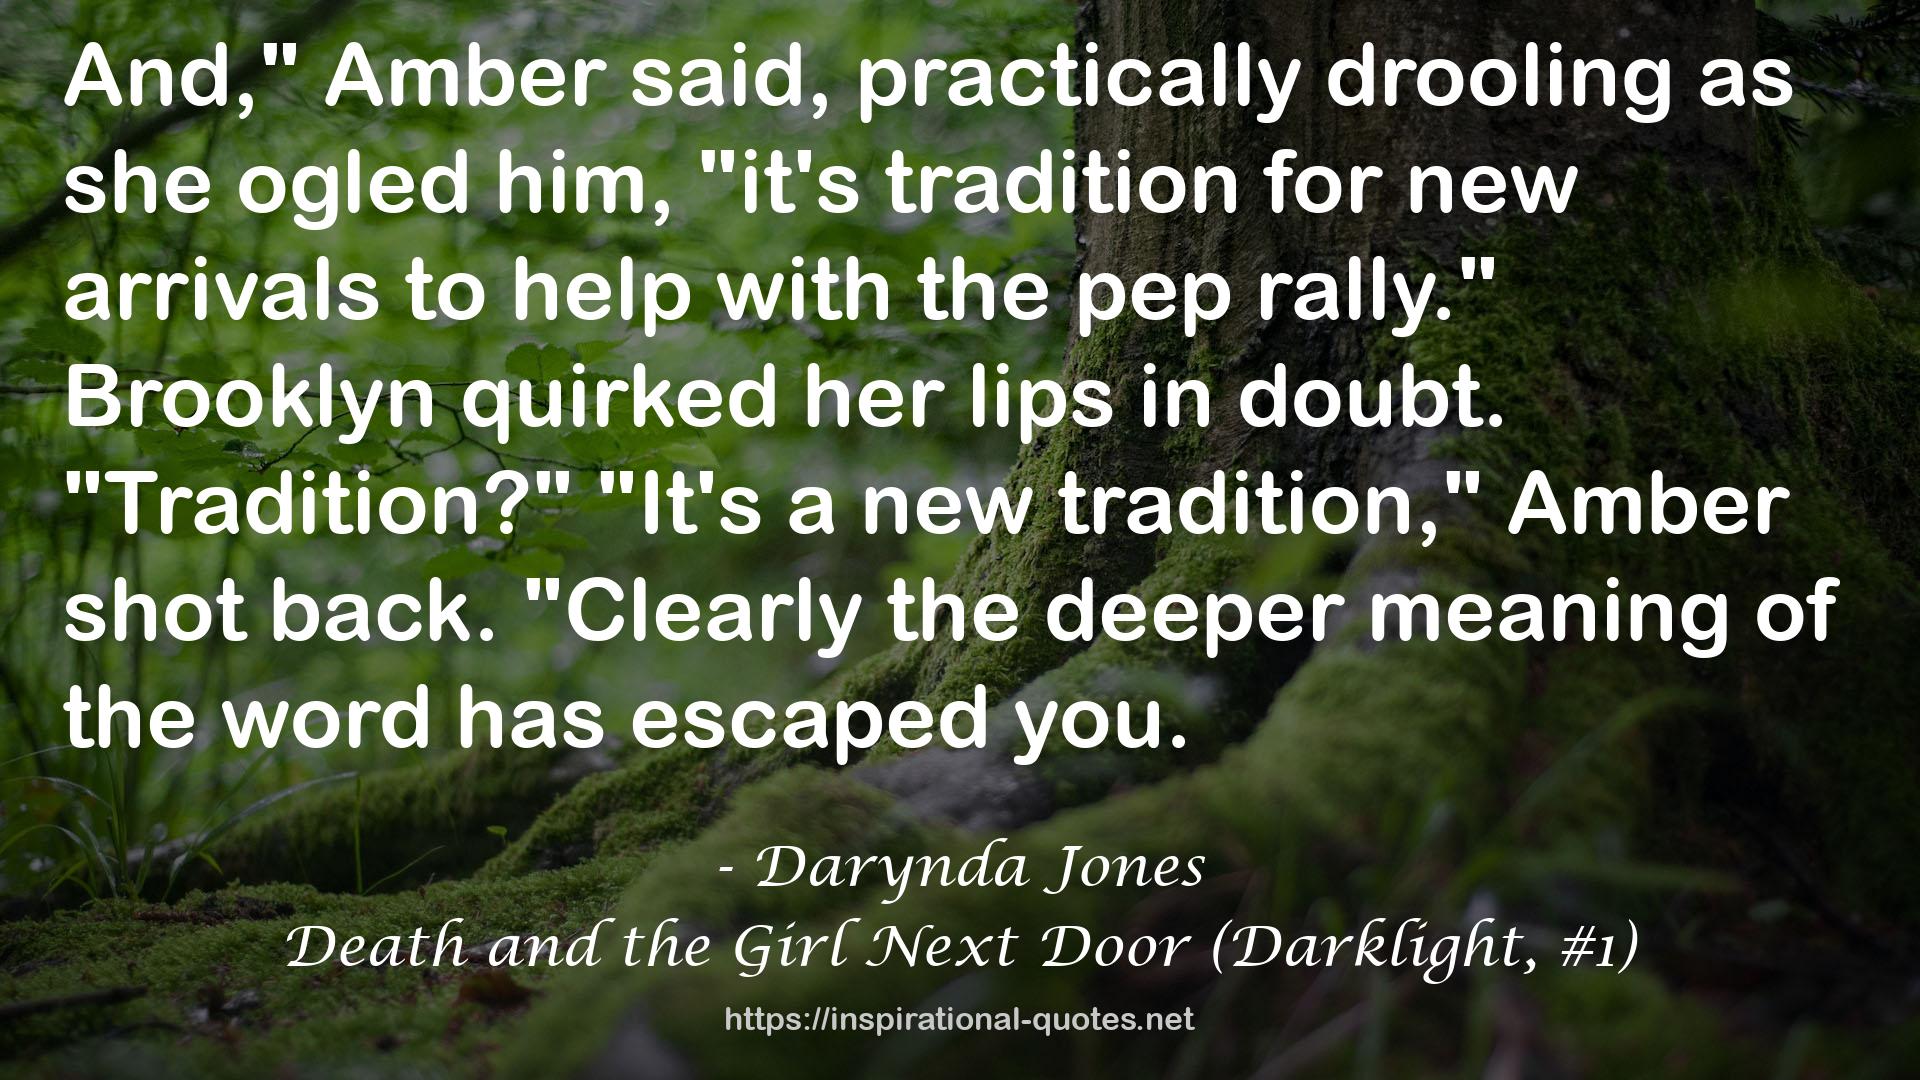 Death and the Girl Next Door (Darklight, #1) QUOTES